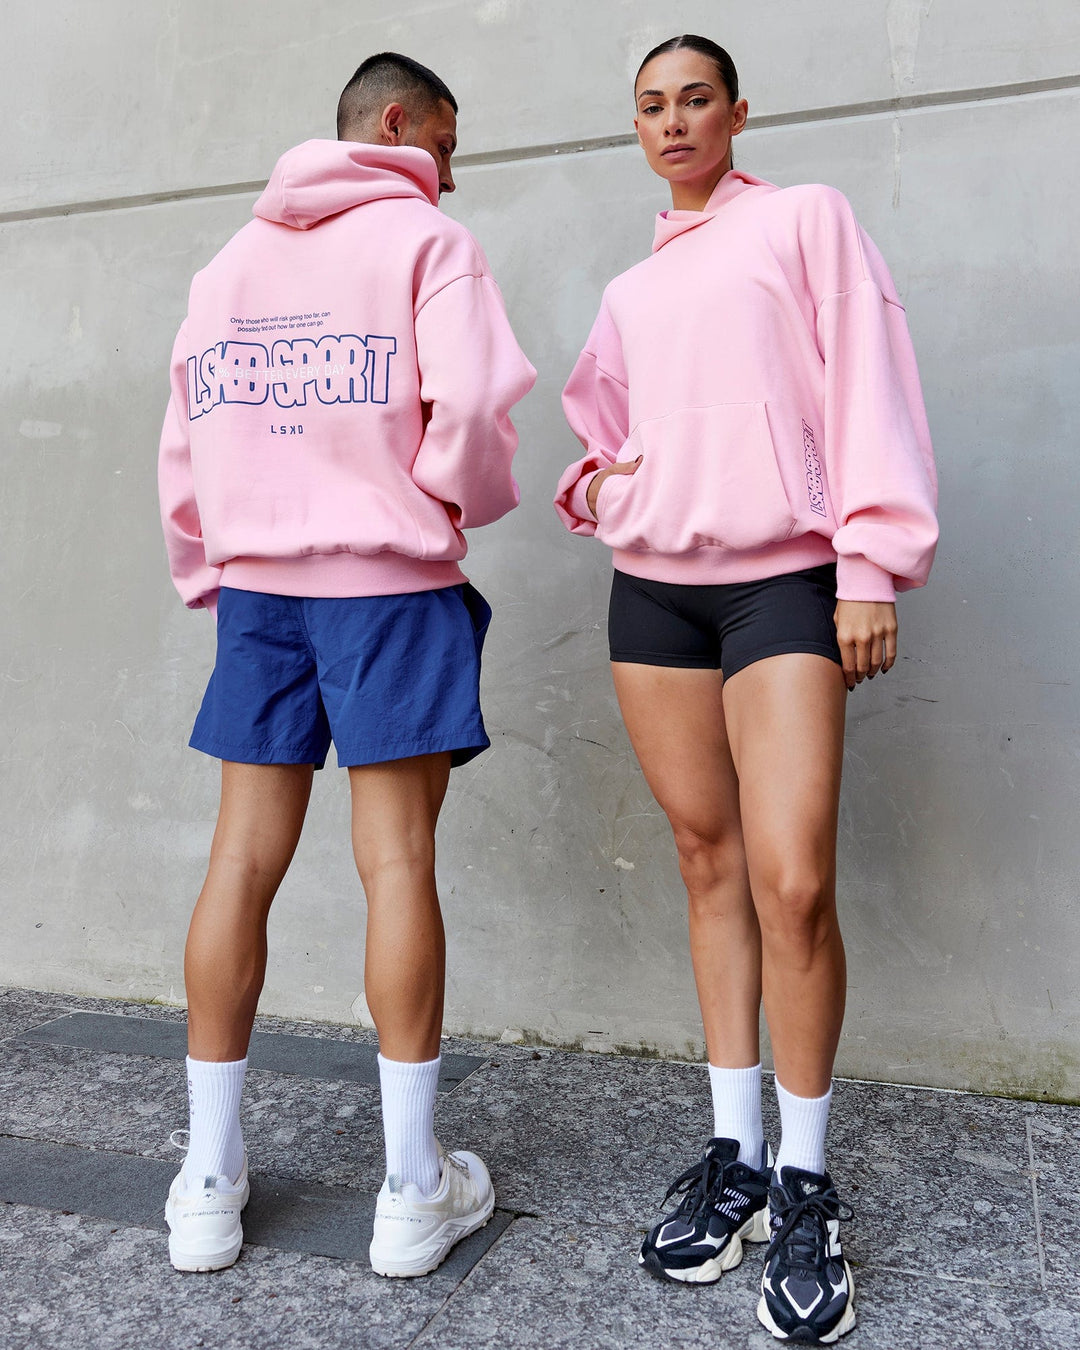 Duo wearing Unisex Urban Hoodie Oversize - Pink Frosting-Galactic Blue